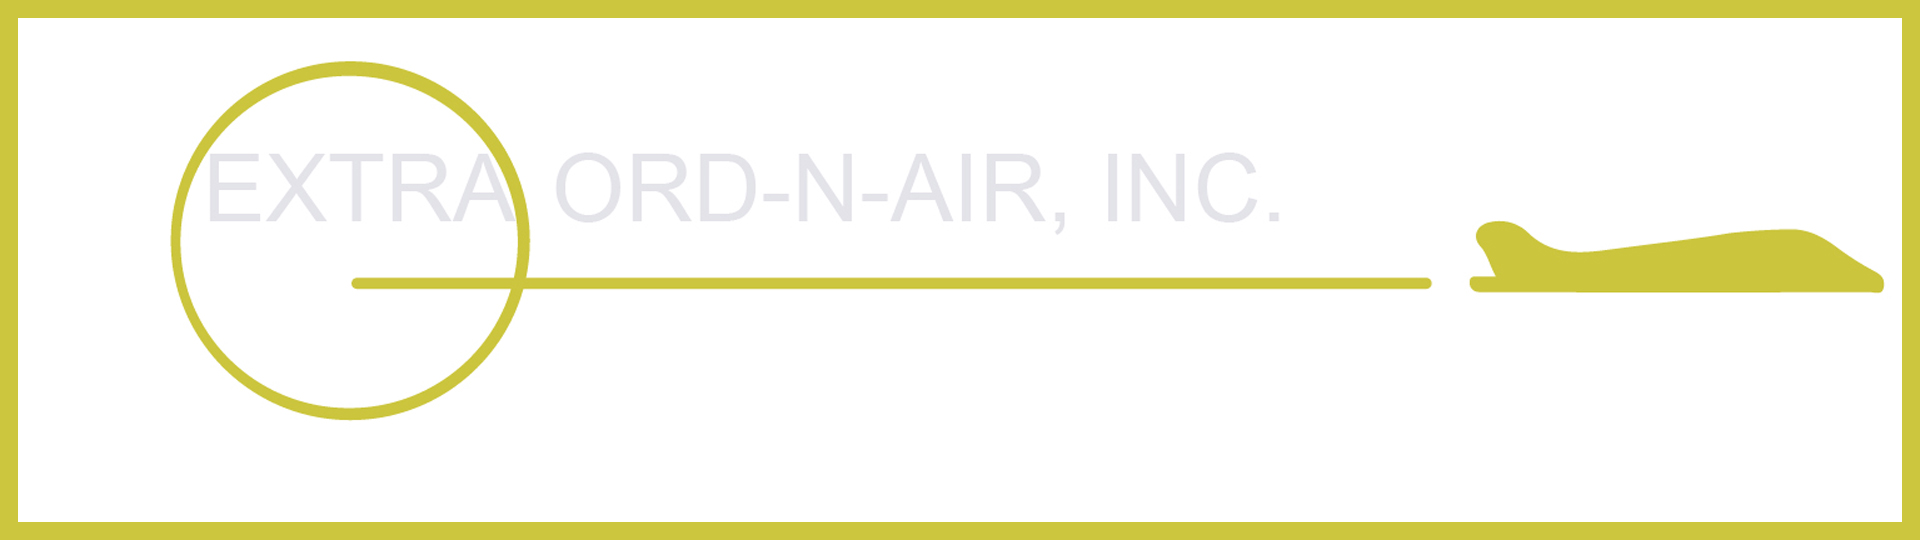 Extra Ord-N-Air, Inc Logo